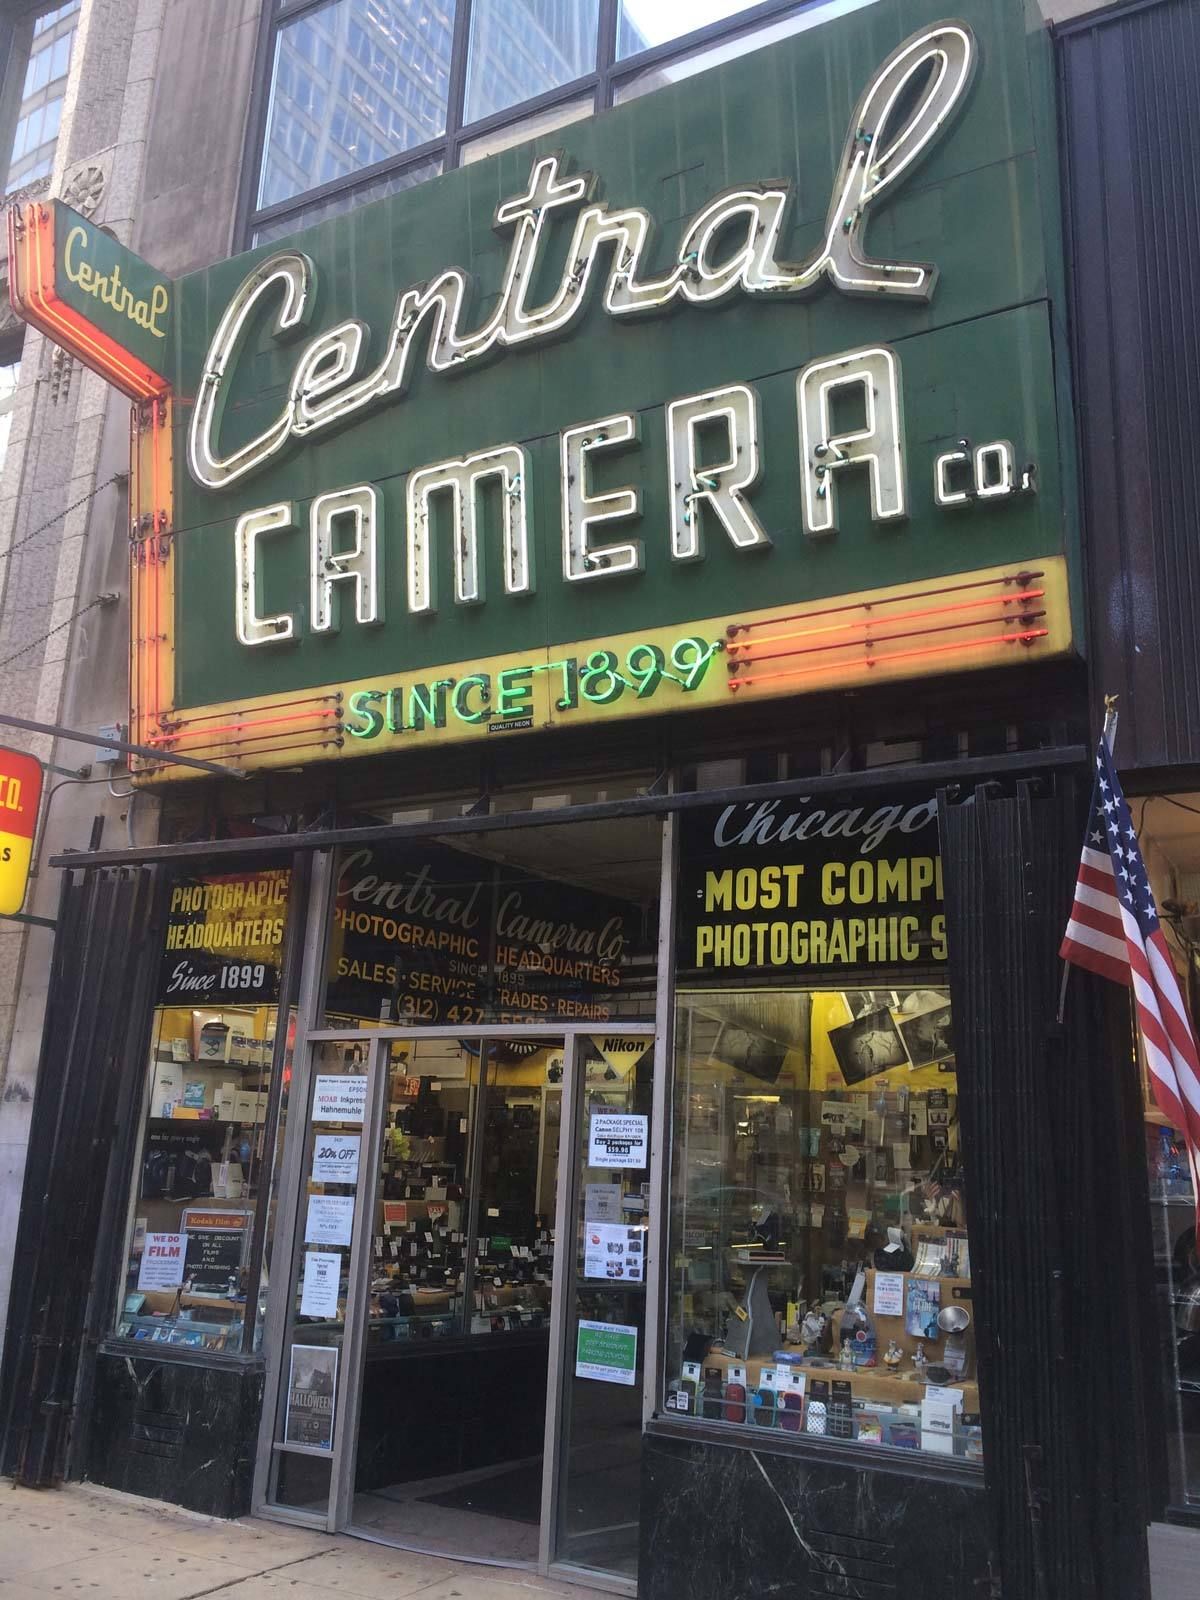 Central Camera